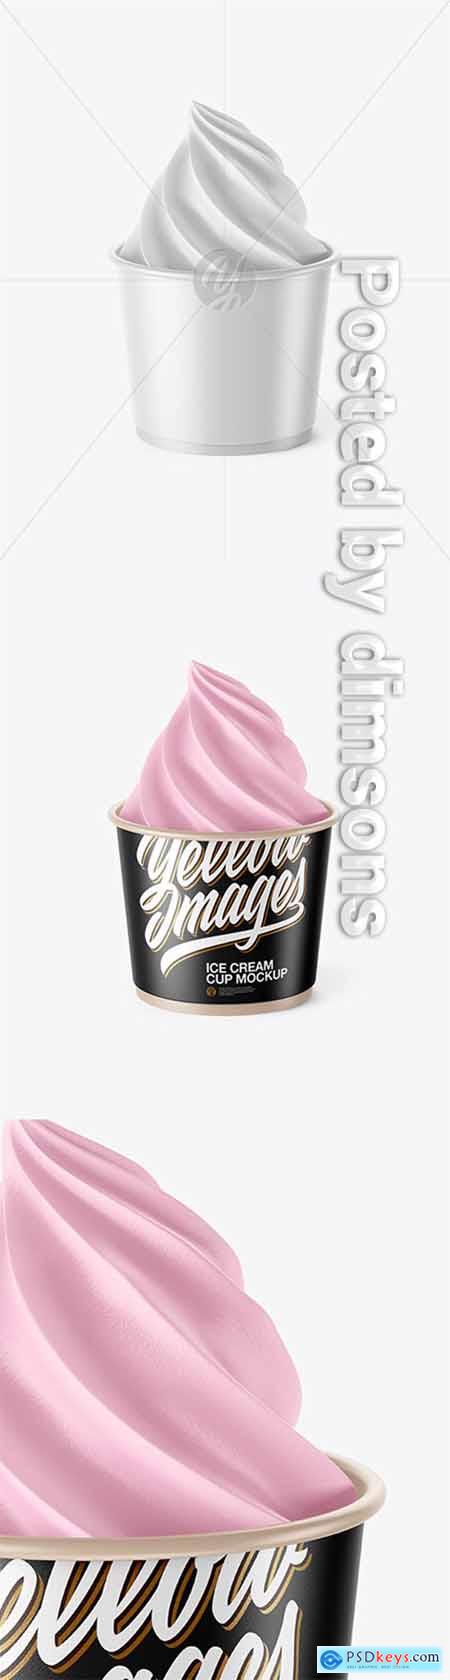 Ice Cream Cup Mockup 27283